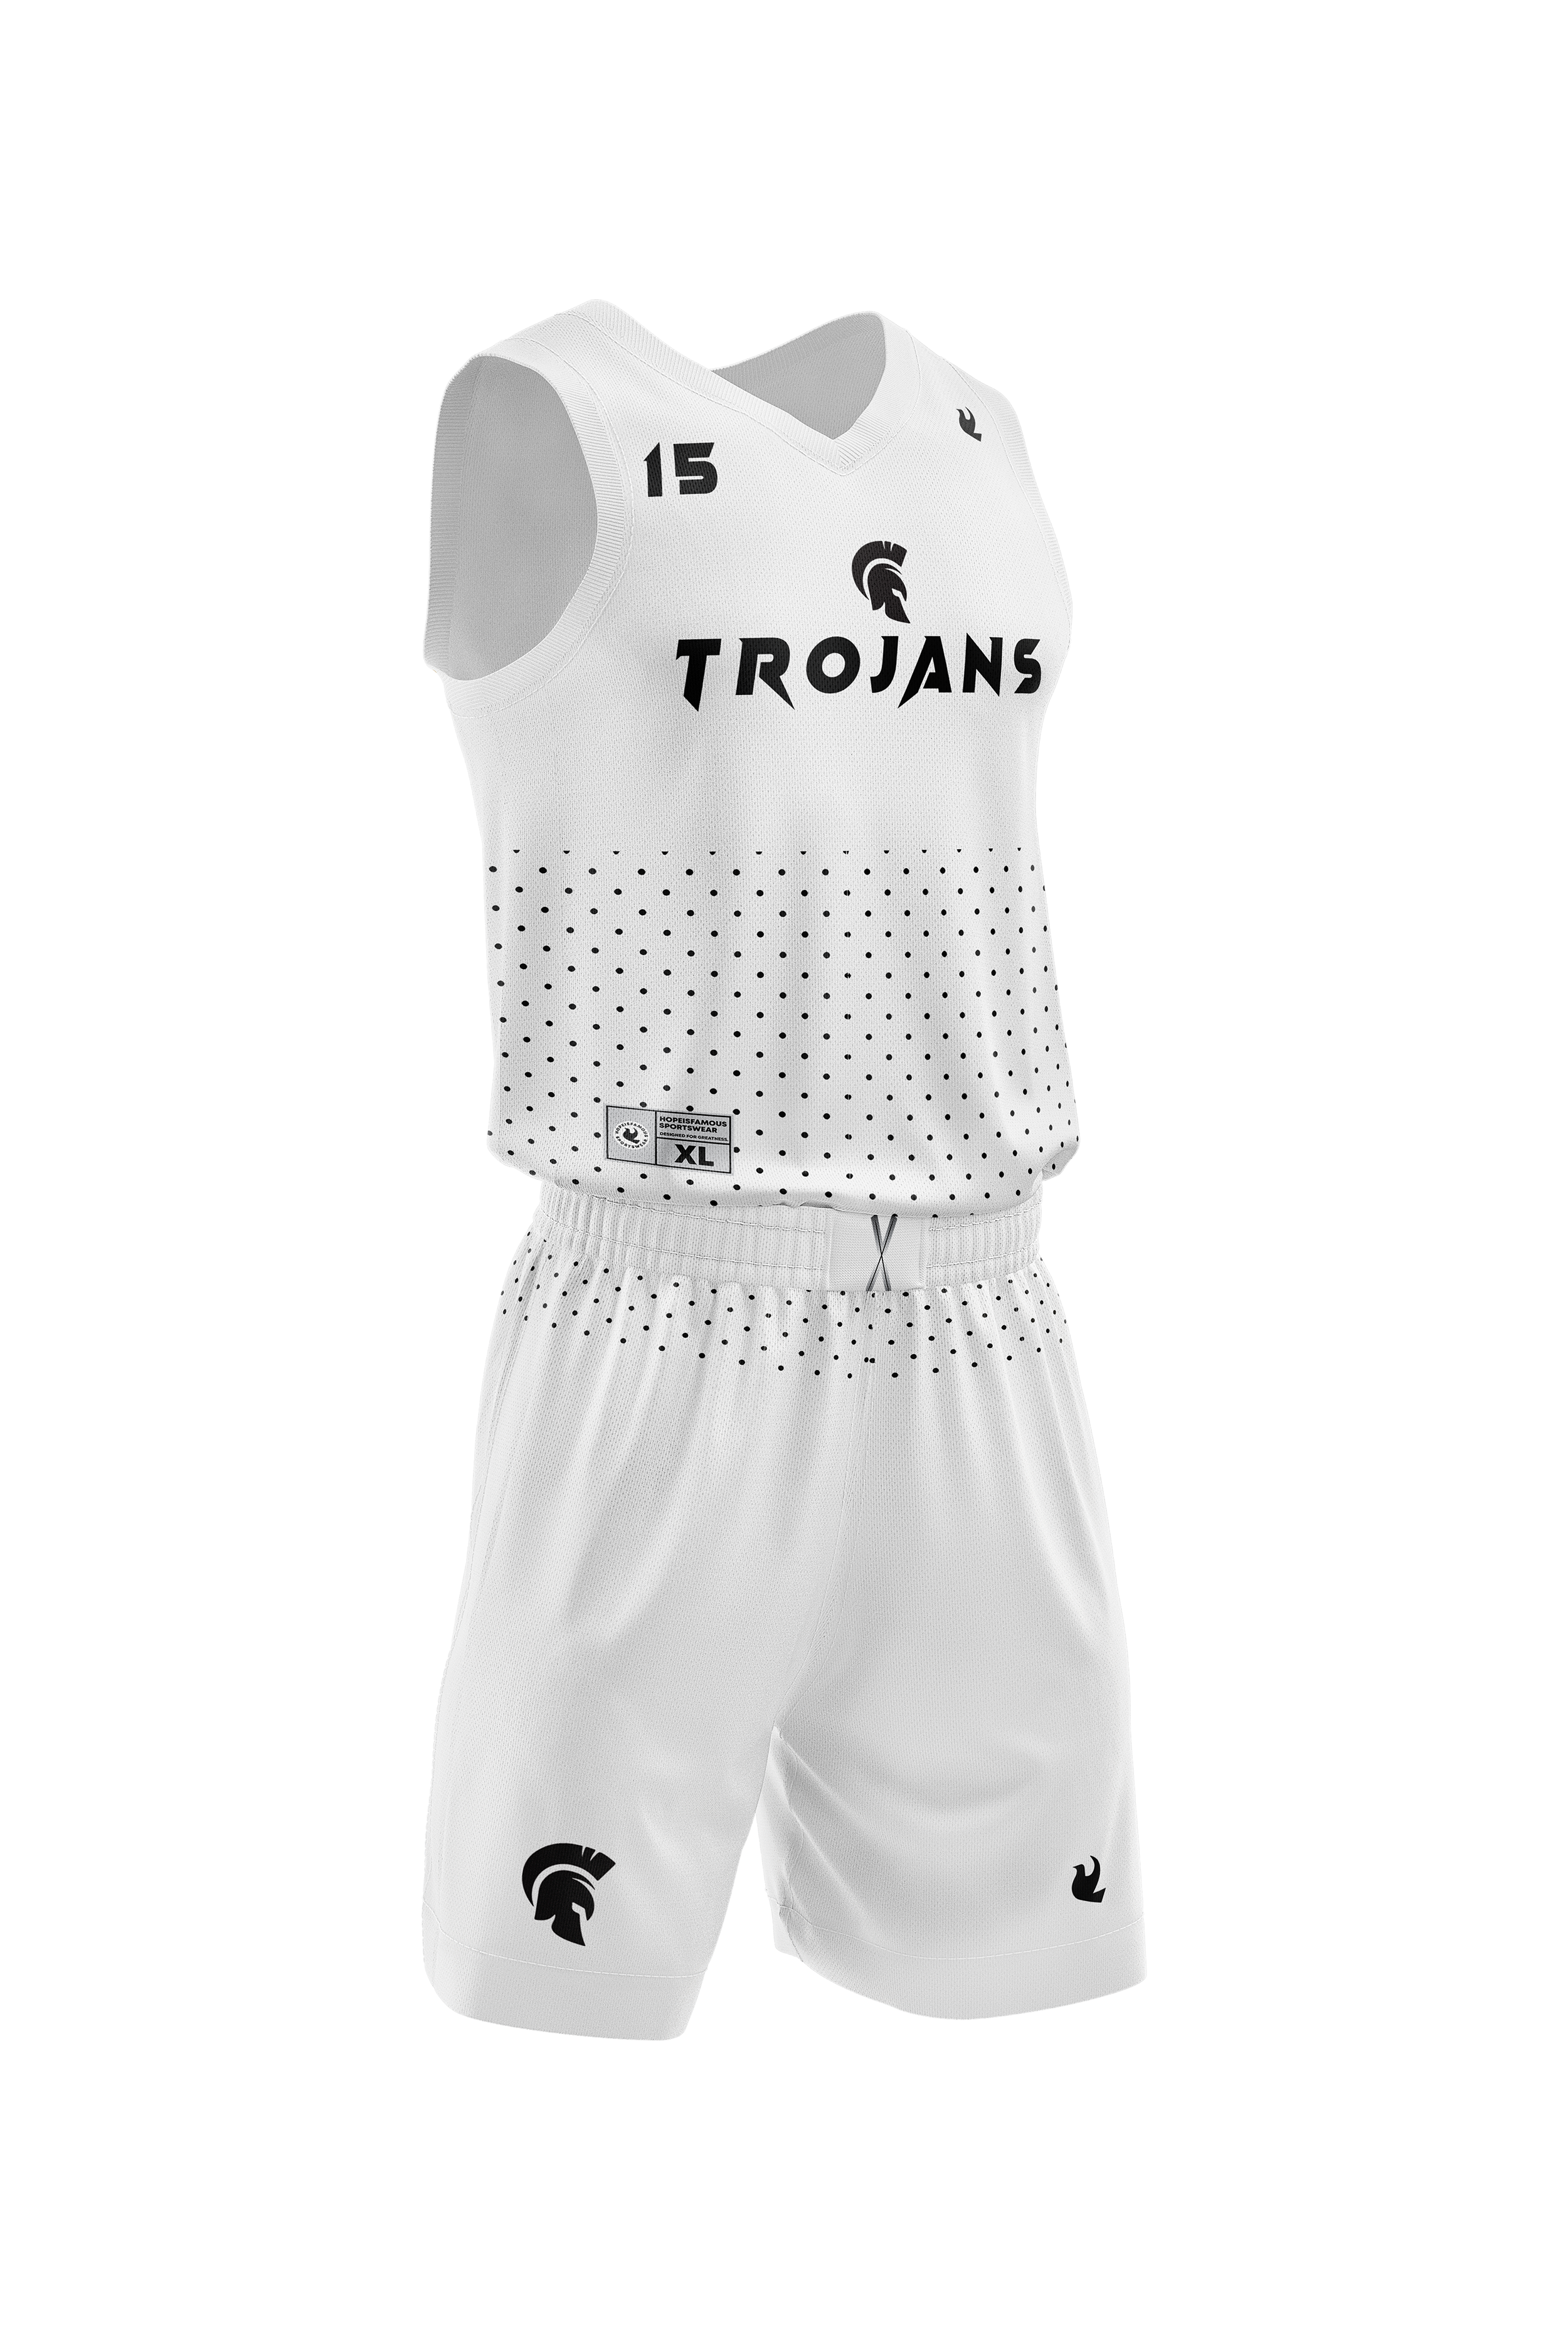 M-Power Basketball Uniform: Trojans